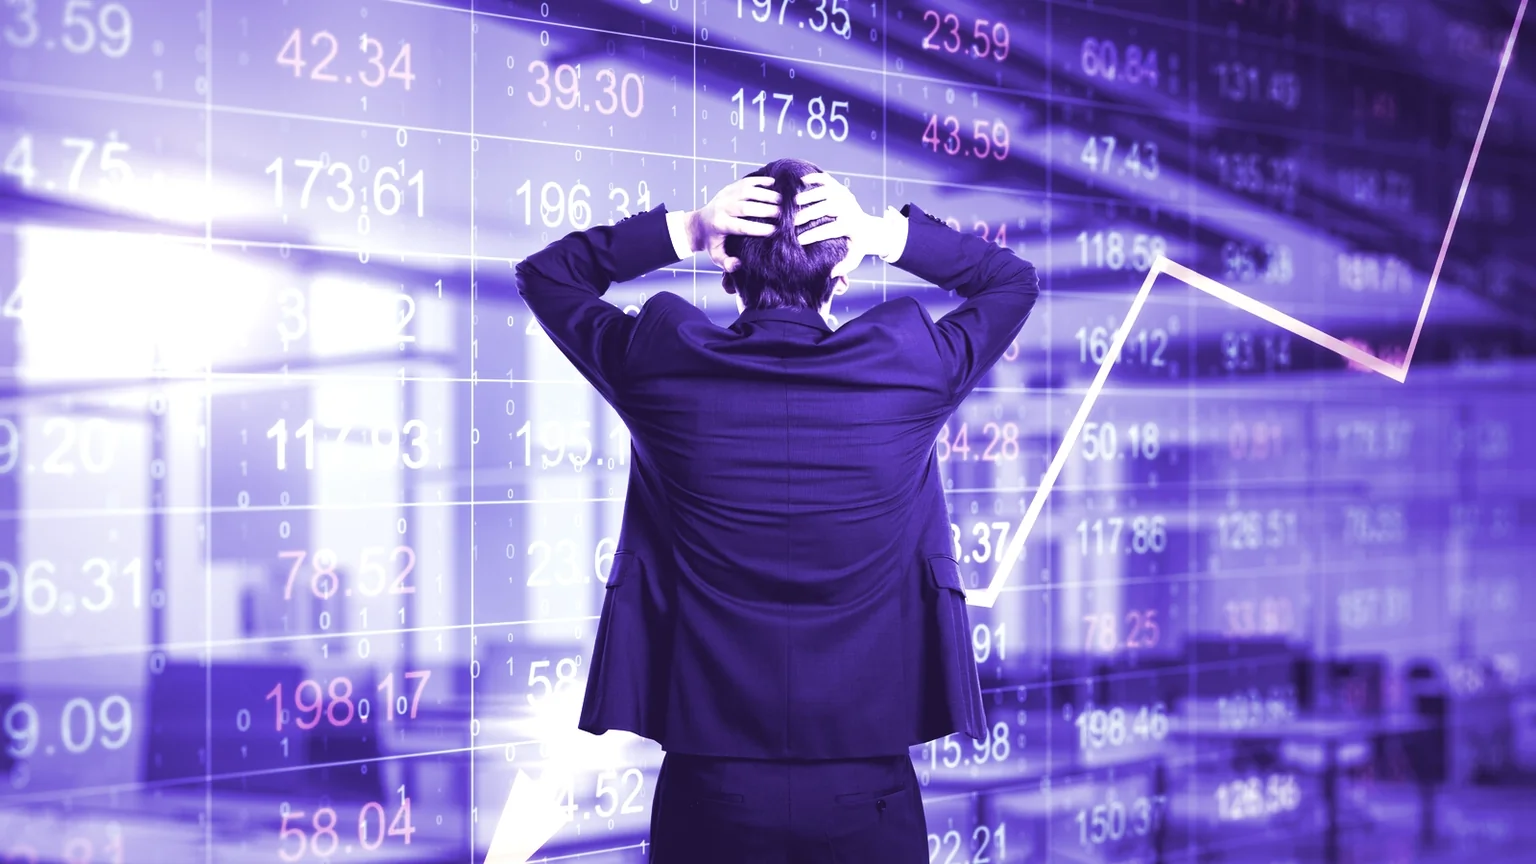 Market decline. Image: Shutterstock